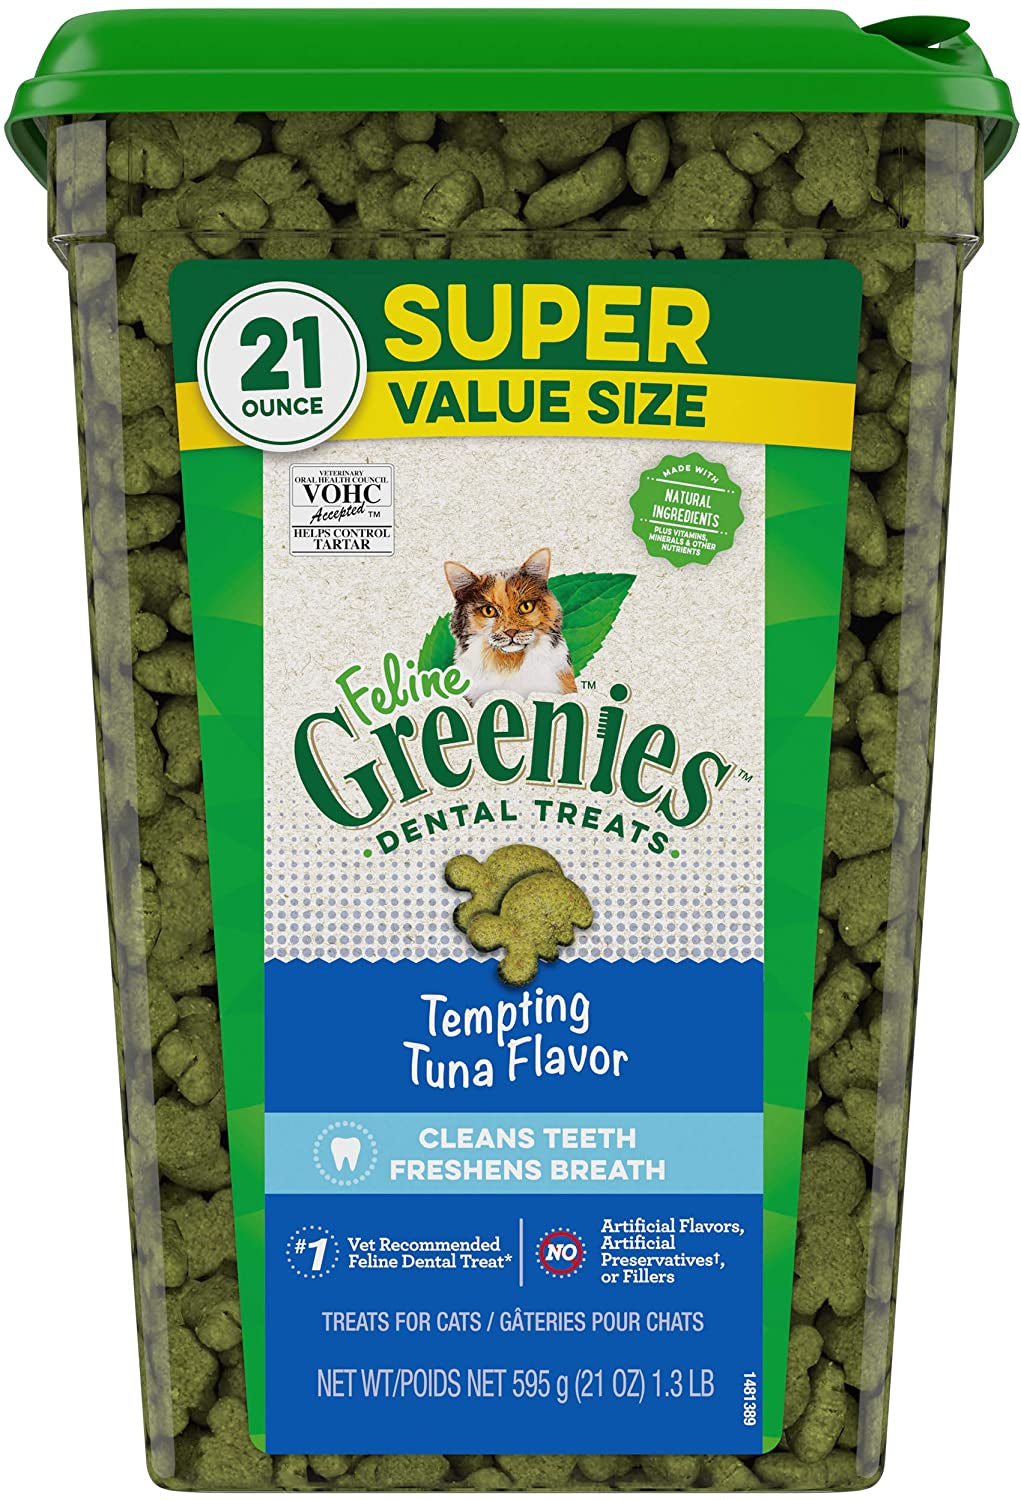 63 oz (3 x 21 oz) Greenies Feline Dental Treats Tempting Tuna Flavor